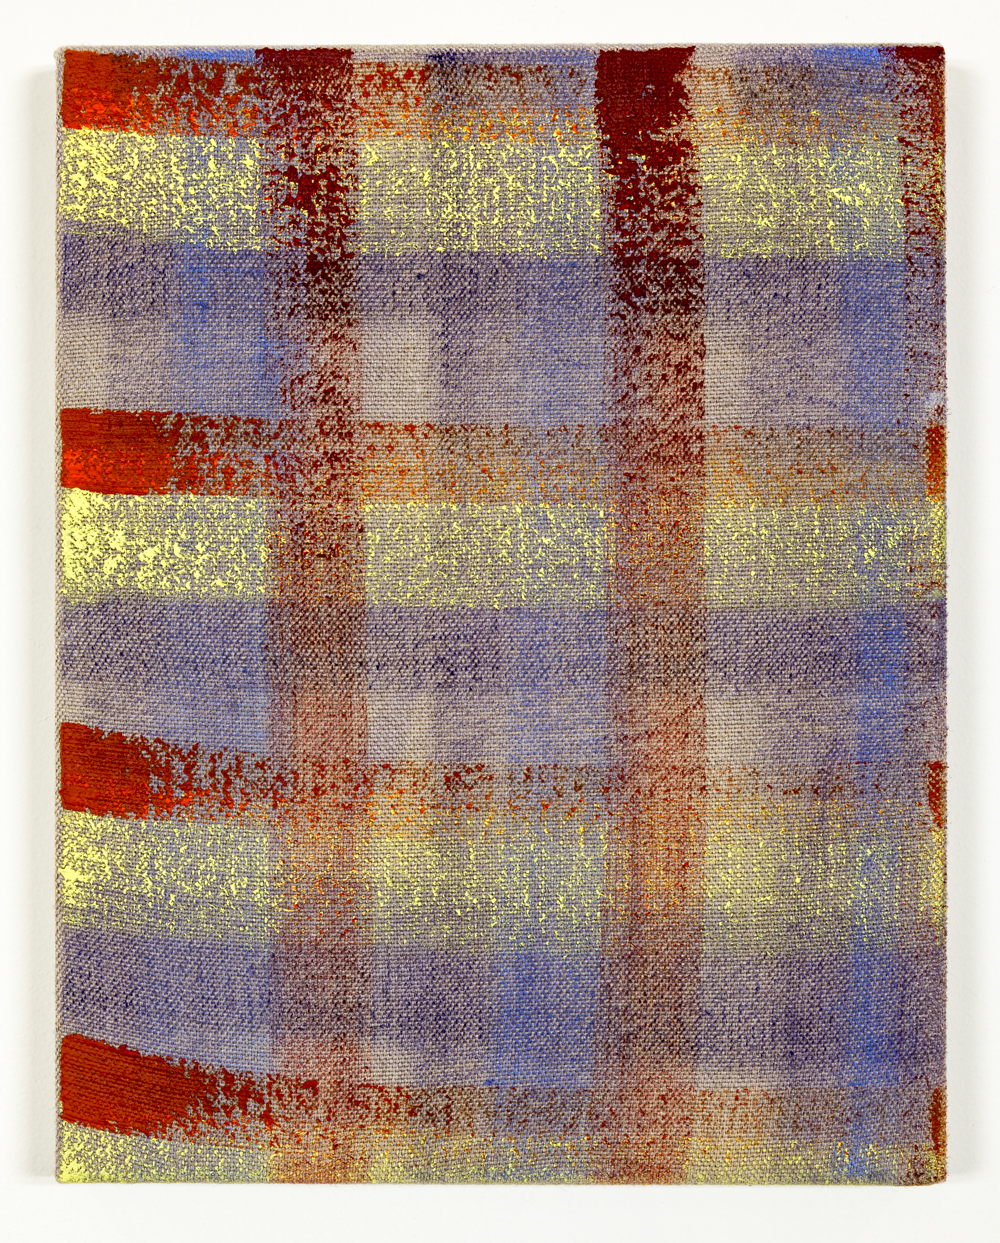 Untitled, Oil on unprimed linen, 14"x11", 2015